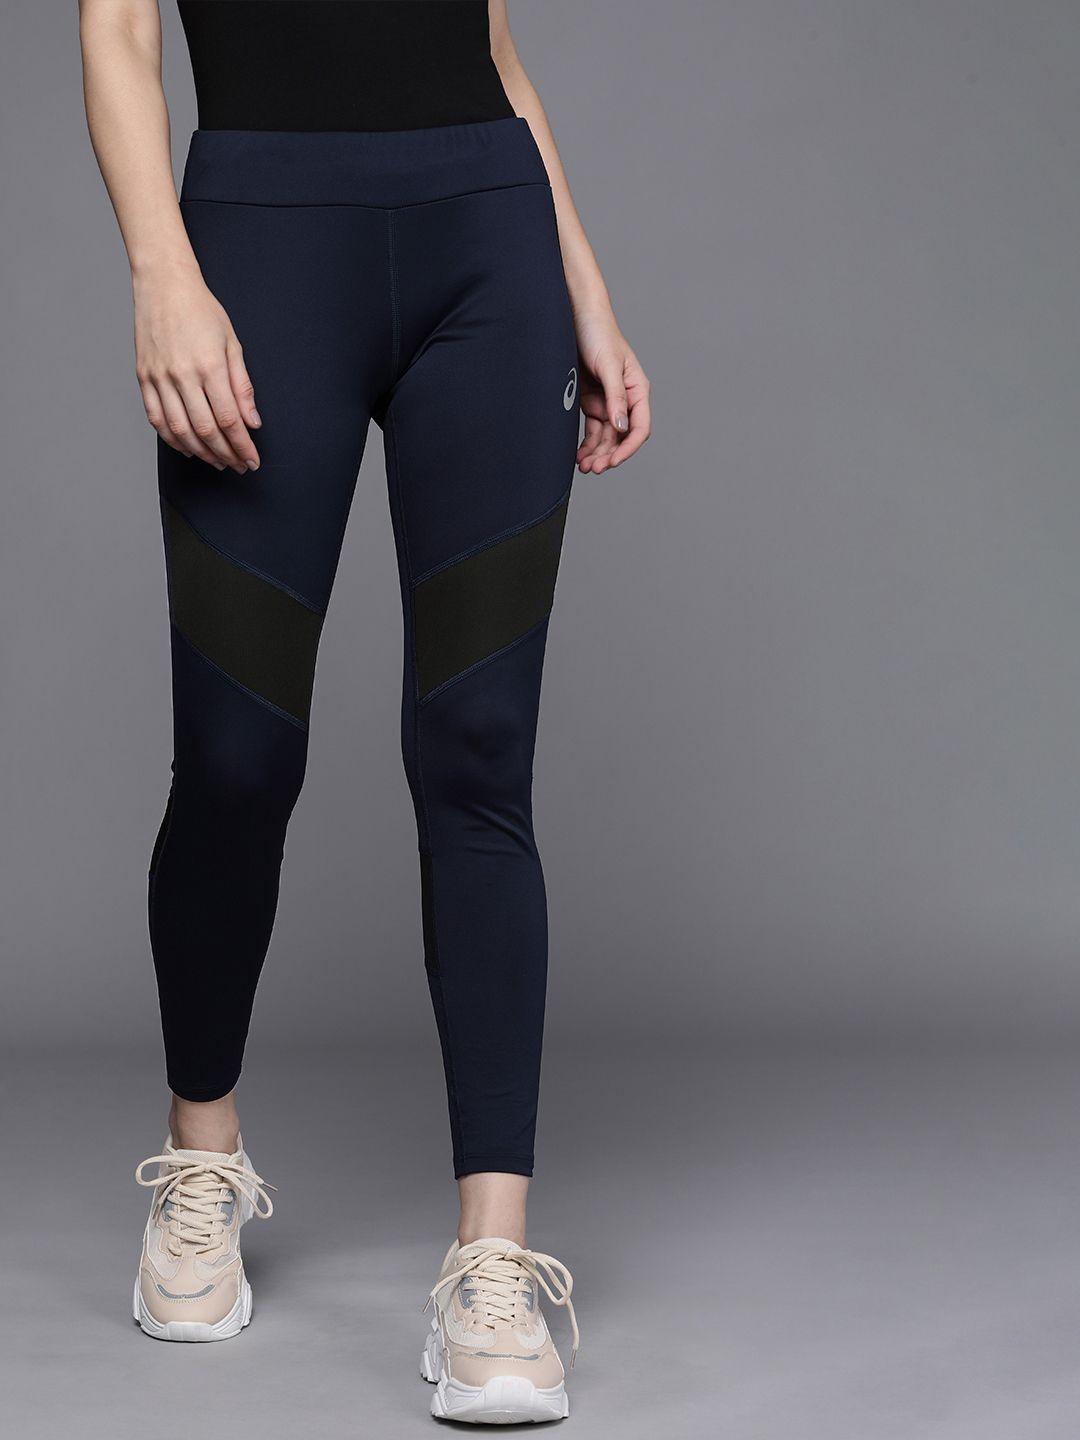 asics women navy blue & black colourblocked paneled running tights